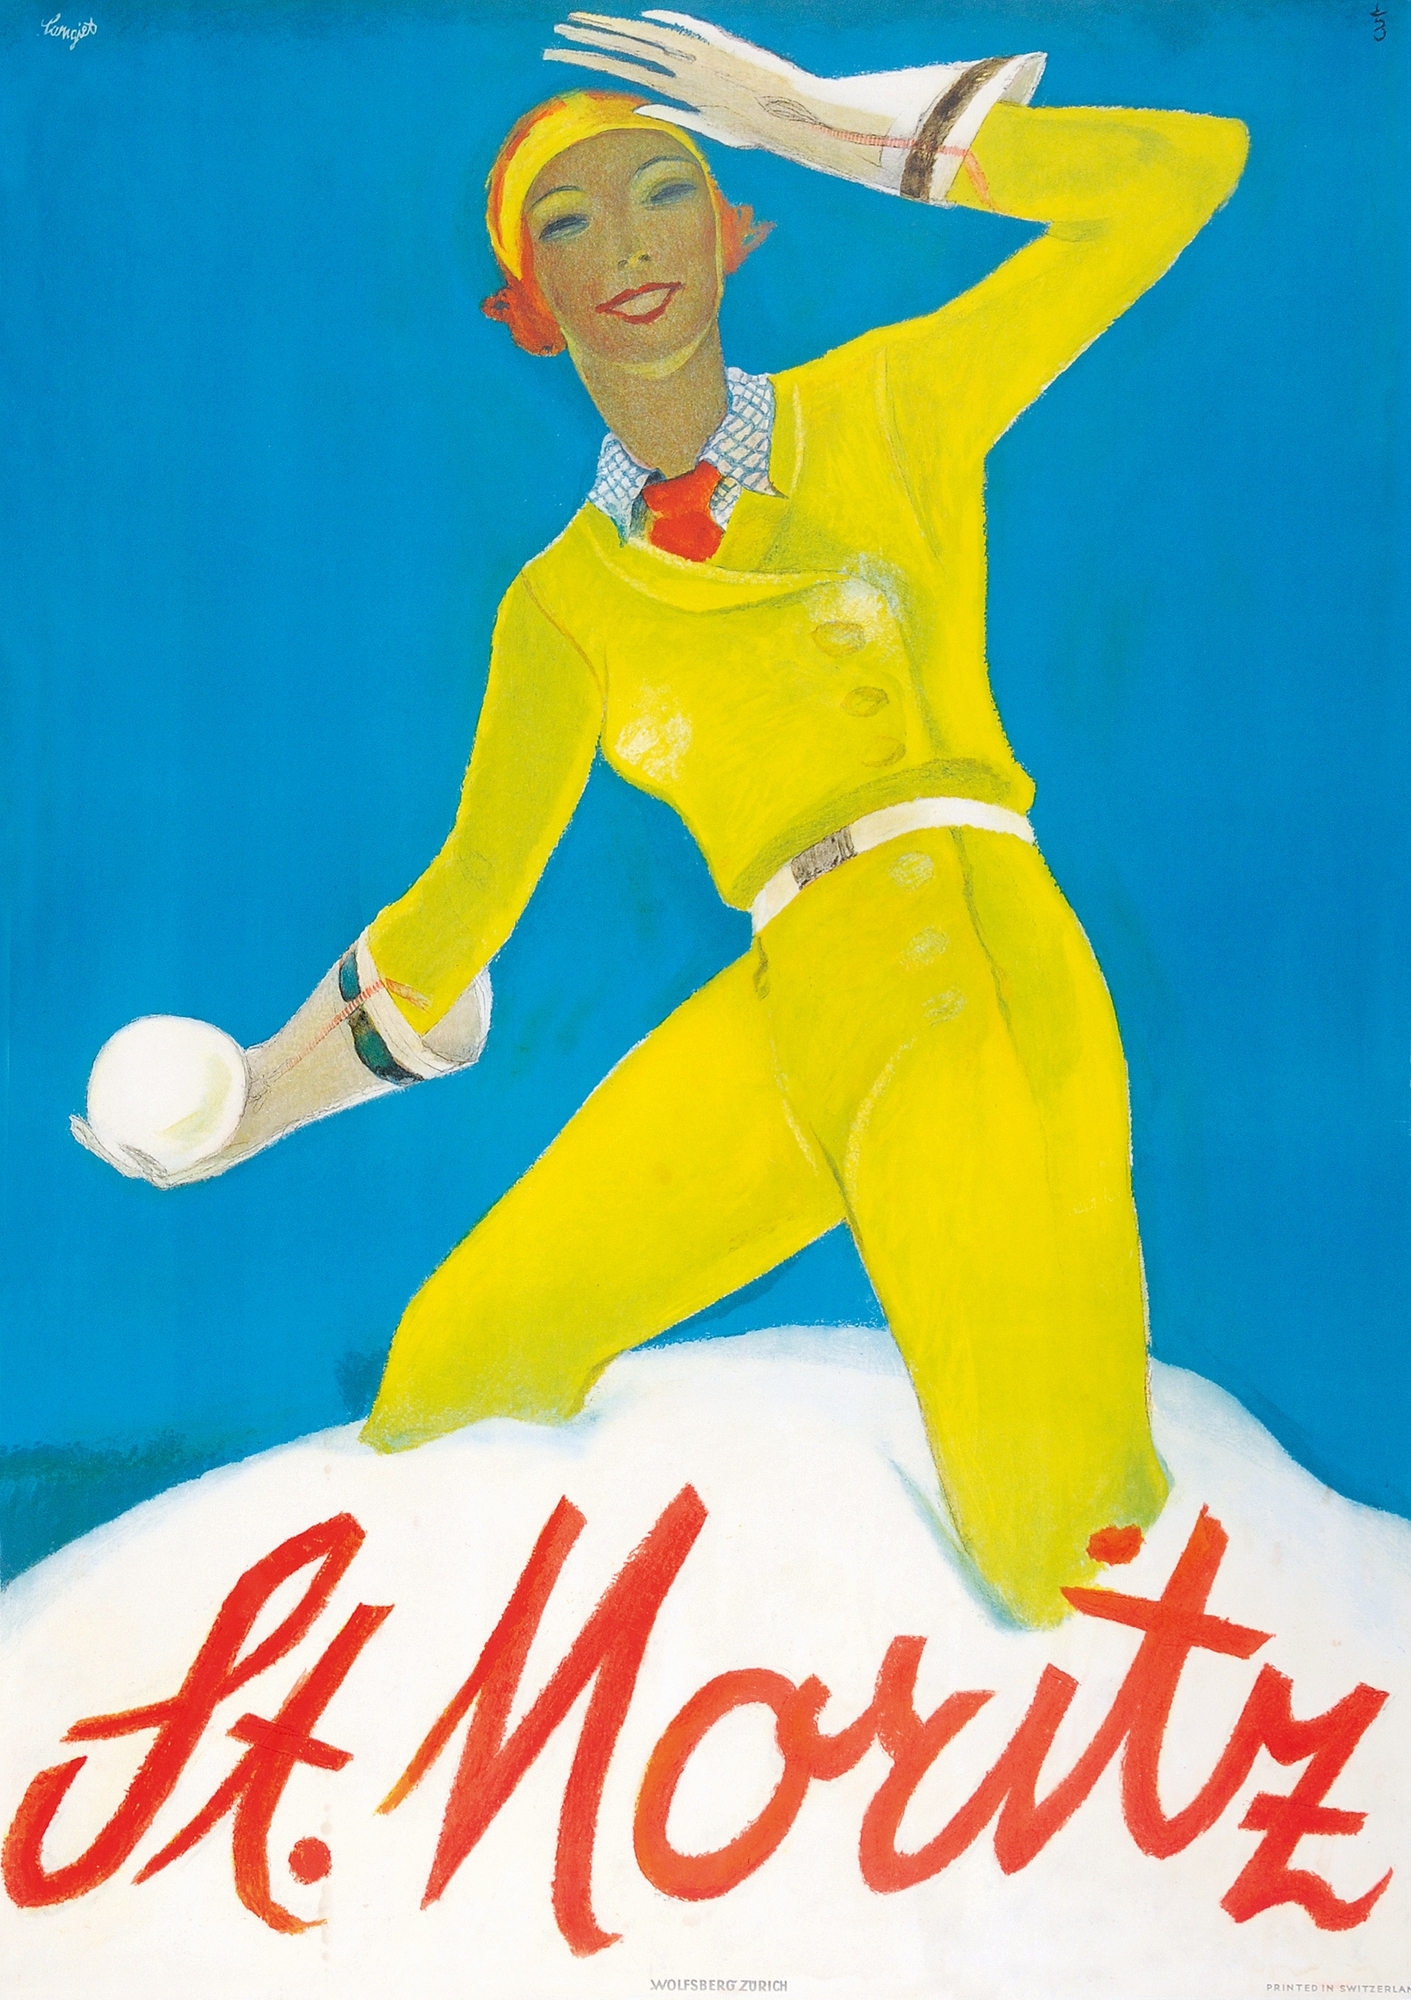 St. Moritz by Alois Carigiet, 1934